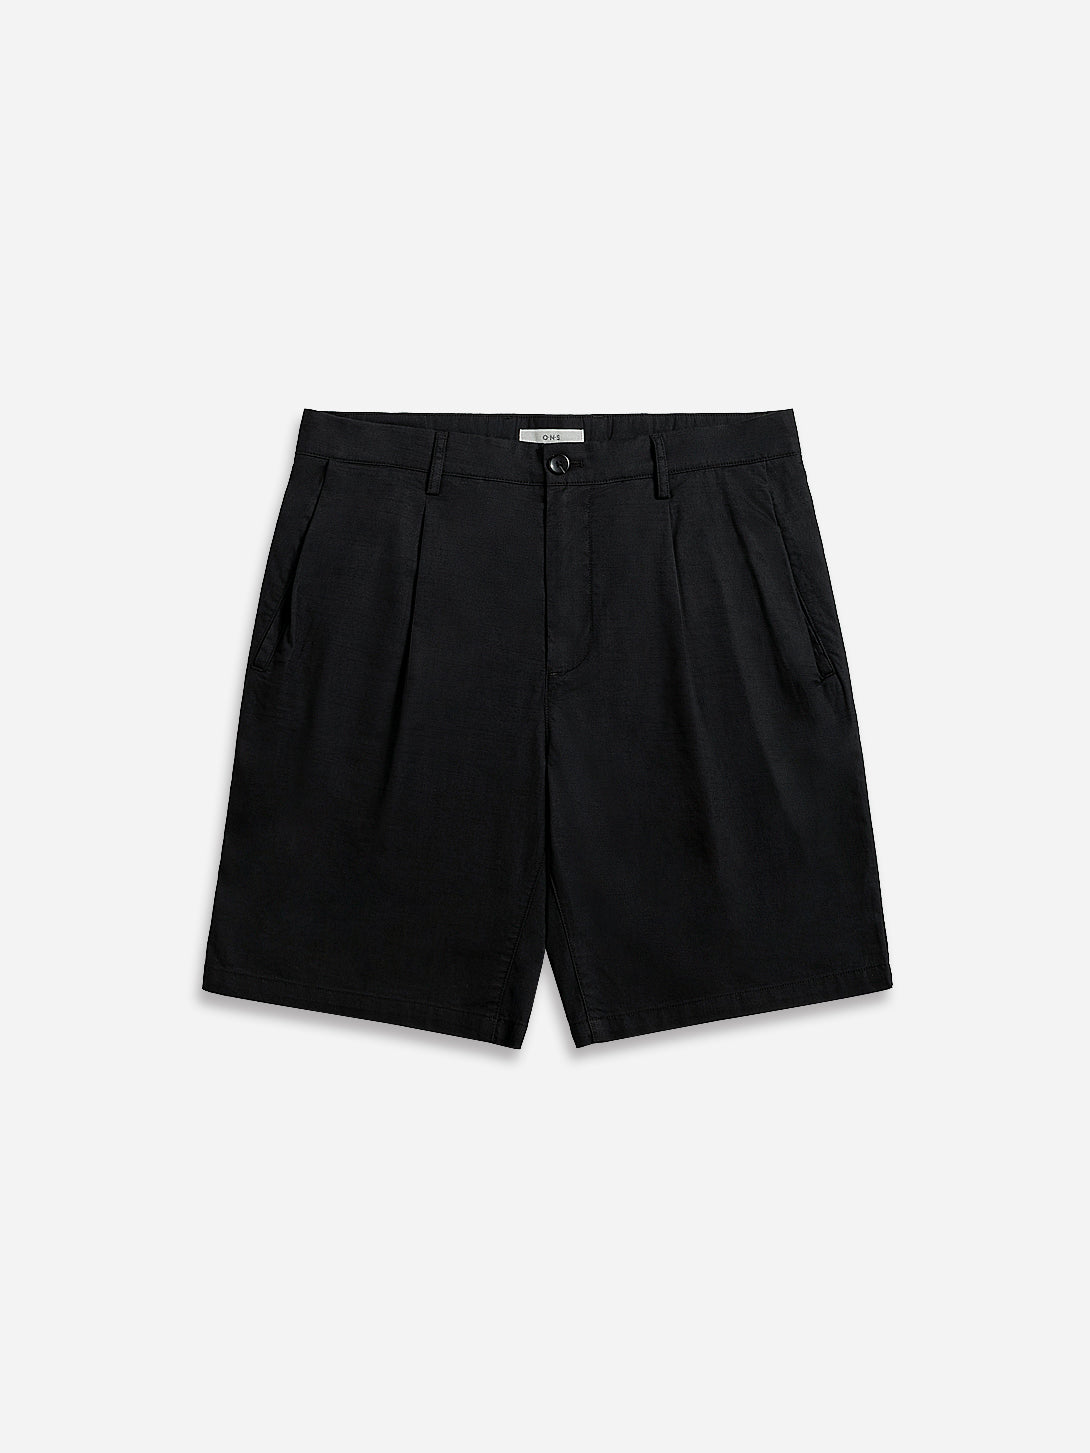 Black Modern Cotton Slub Shorts Men's O.N.S SS23